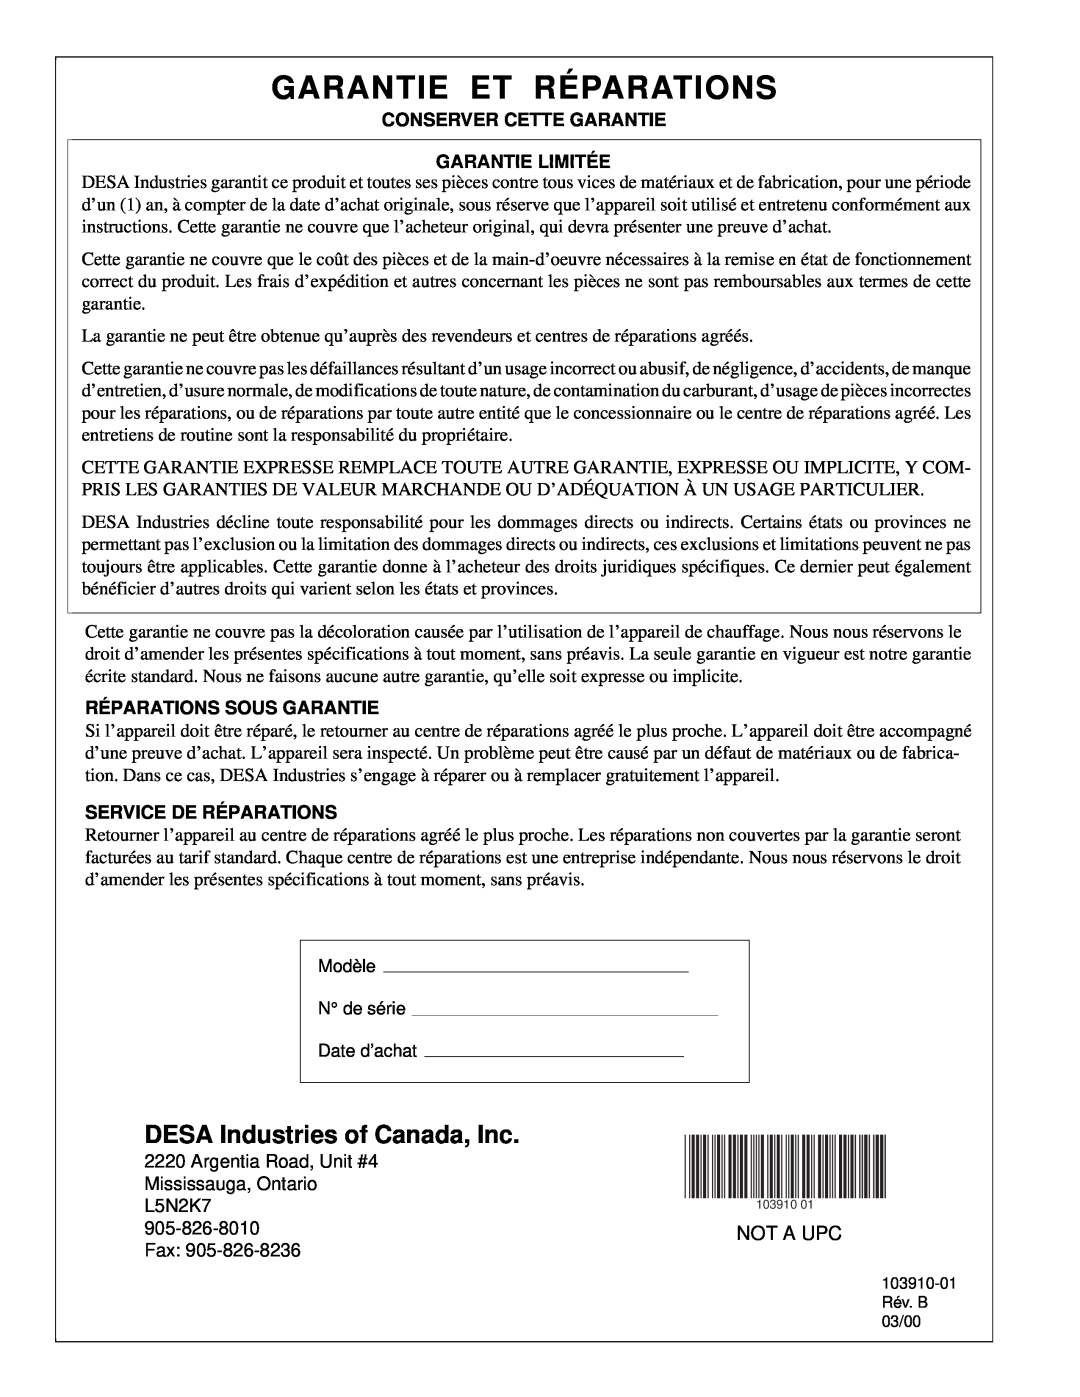 Desa RCLP375B owner manual Garantie Et Réparations, DESA Industries of Canada, Inc, Not A Upc, Limited Warranty 